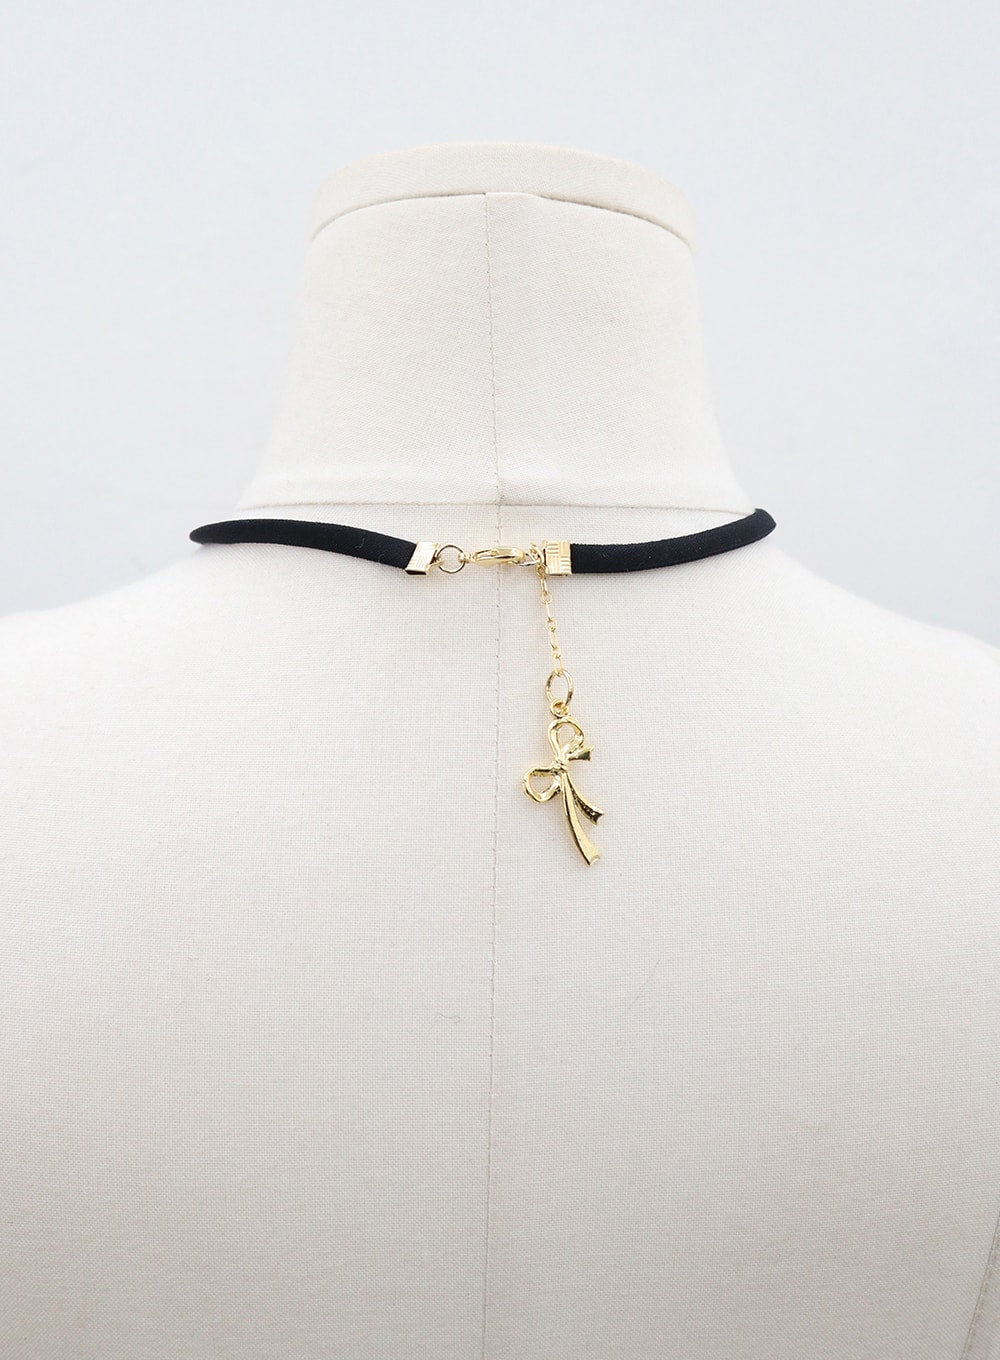 Gold Pearl Black Ribbon Choker Necklace